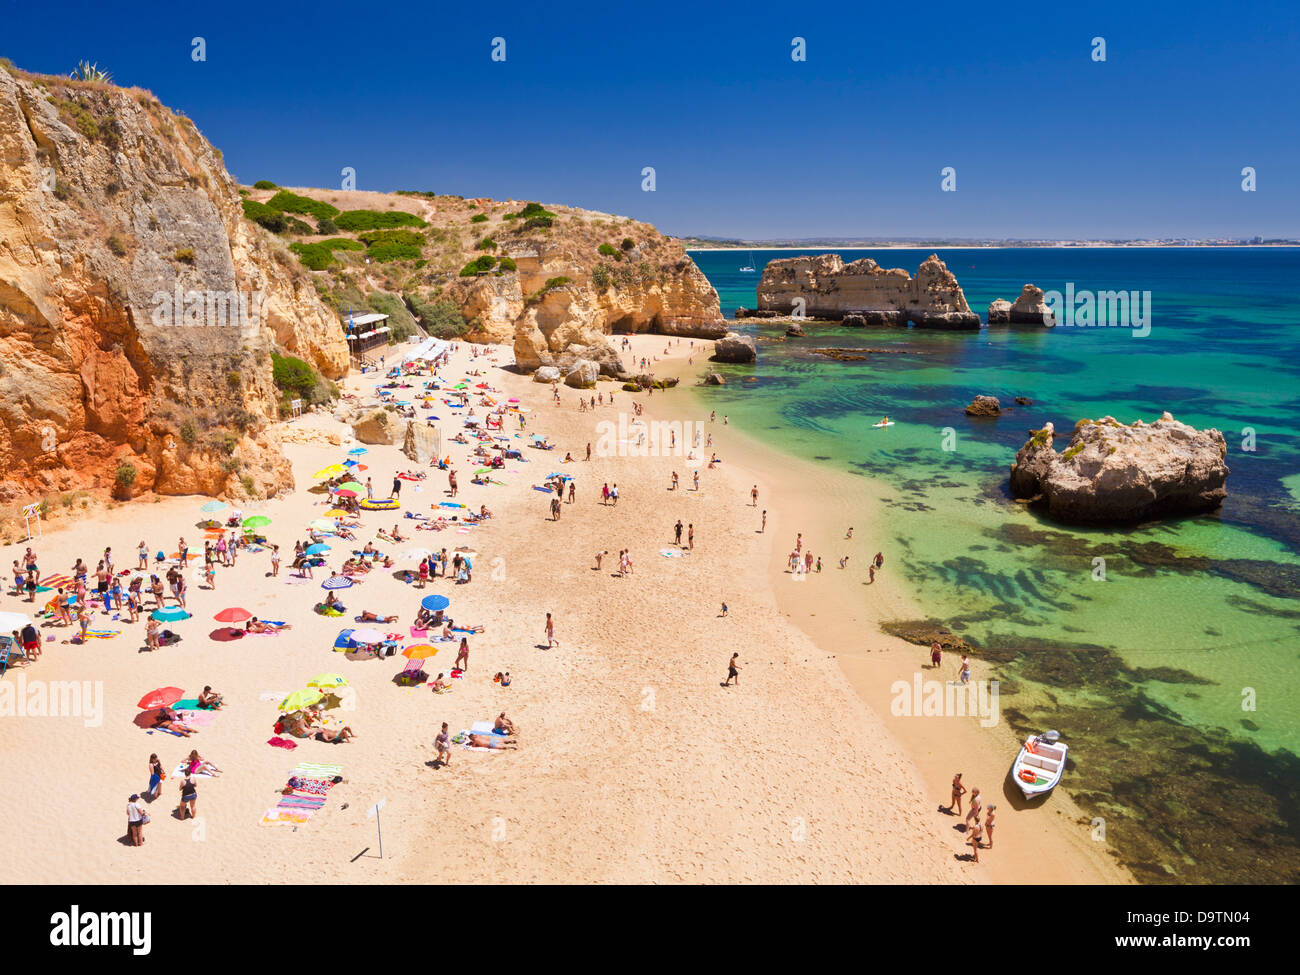 Travel Holidaymakers sunbathing on Praia da Dona Ana sandy beach near the resort of Lagos Algarve Portugal EU Europe Stock Photo